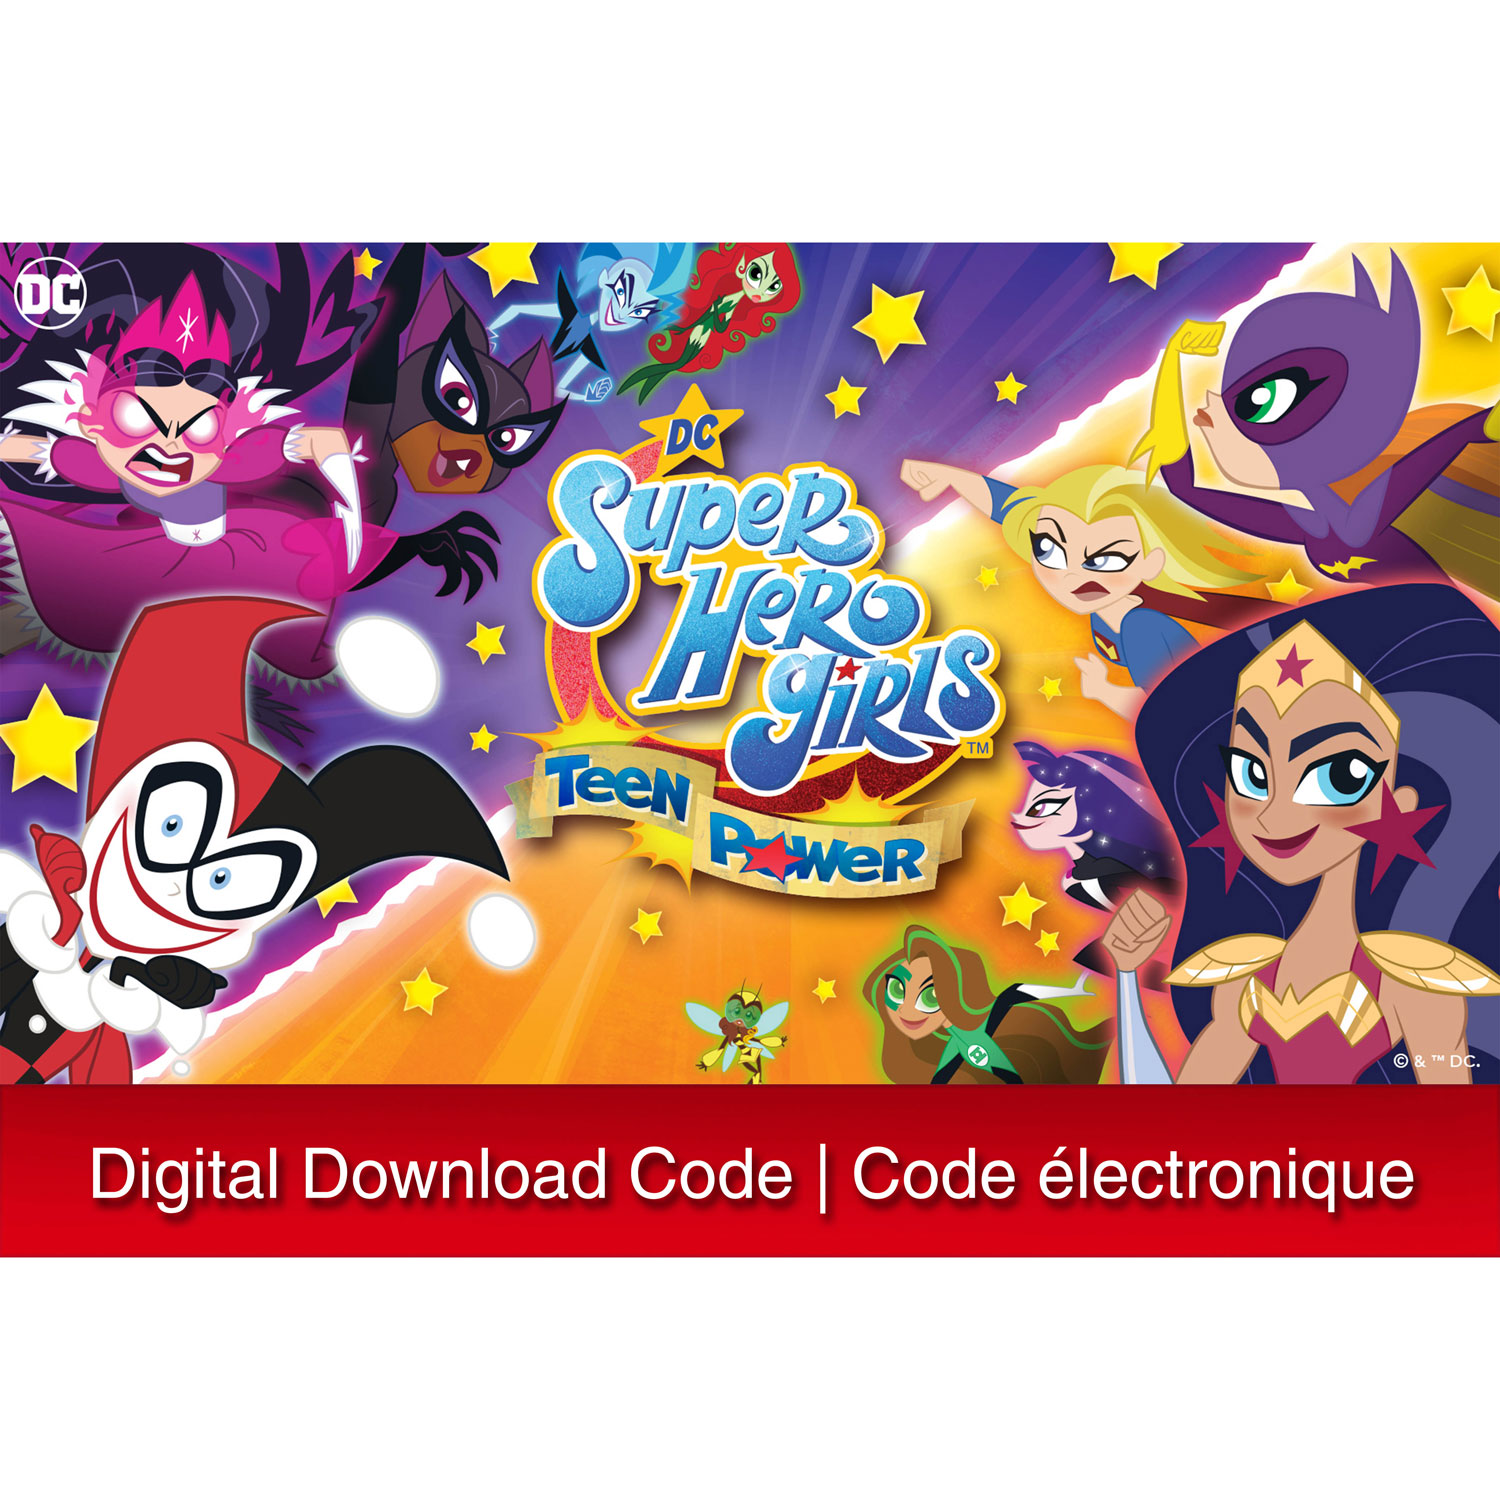 DC Super Hero Girls: Teen Power (Switch) - Digital Download